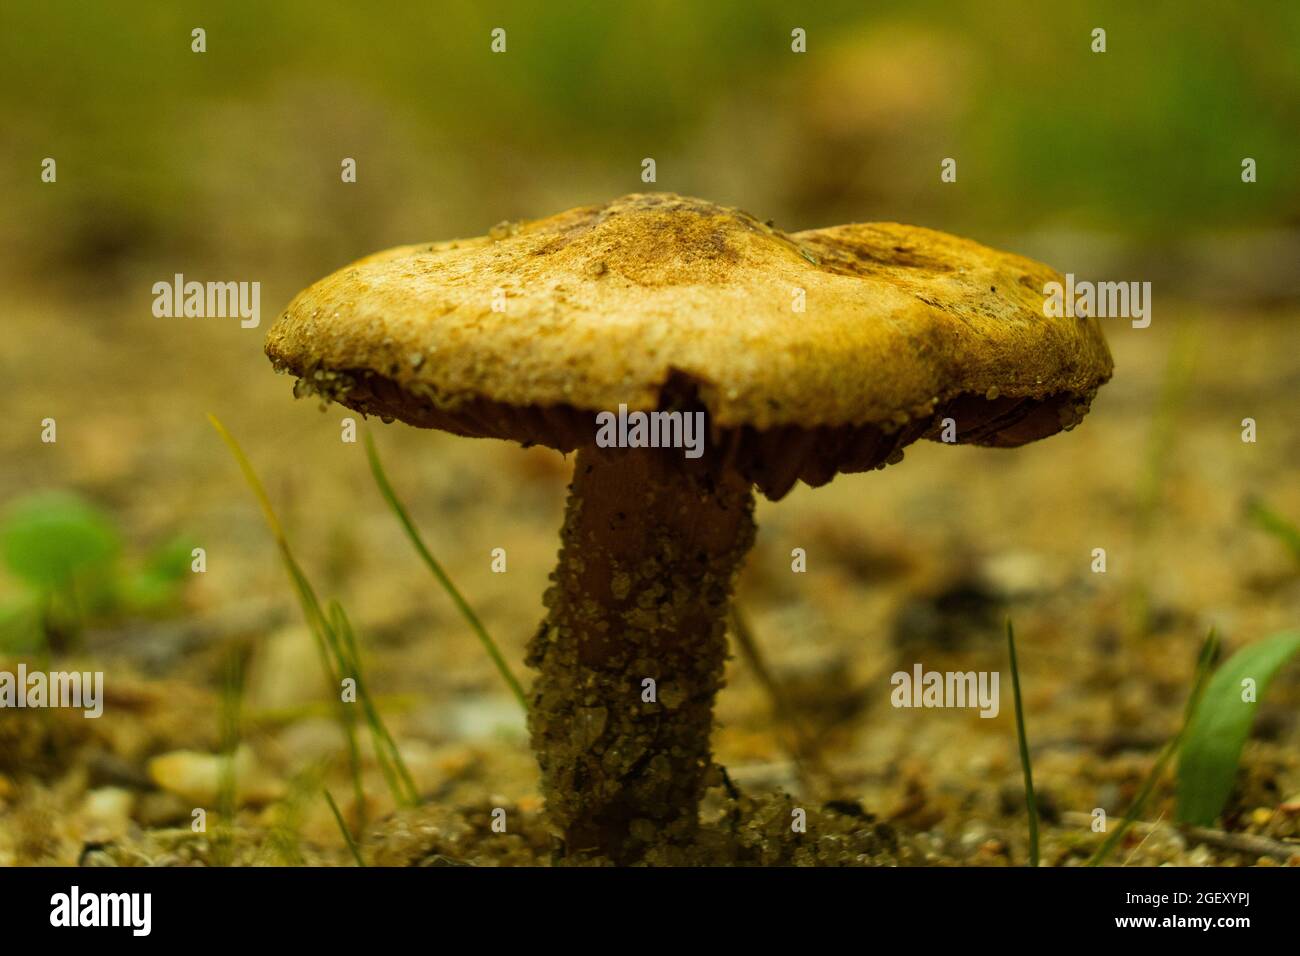 A mushroom on a sandy land Stock Photo